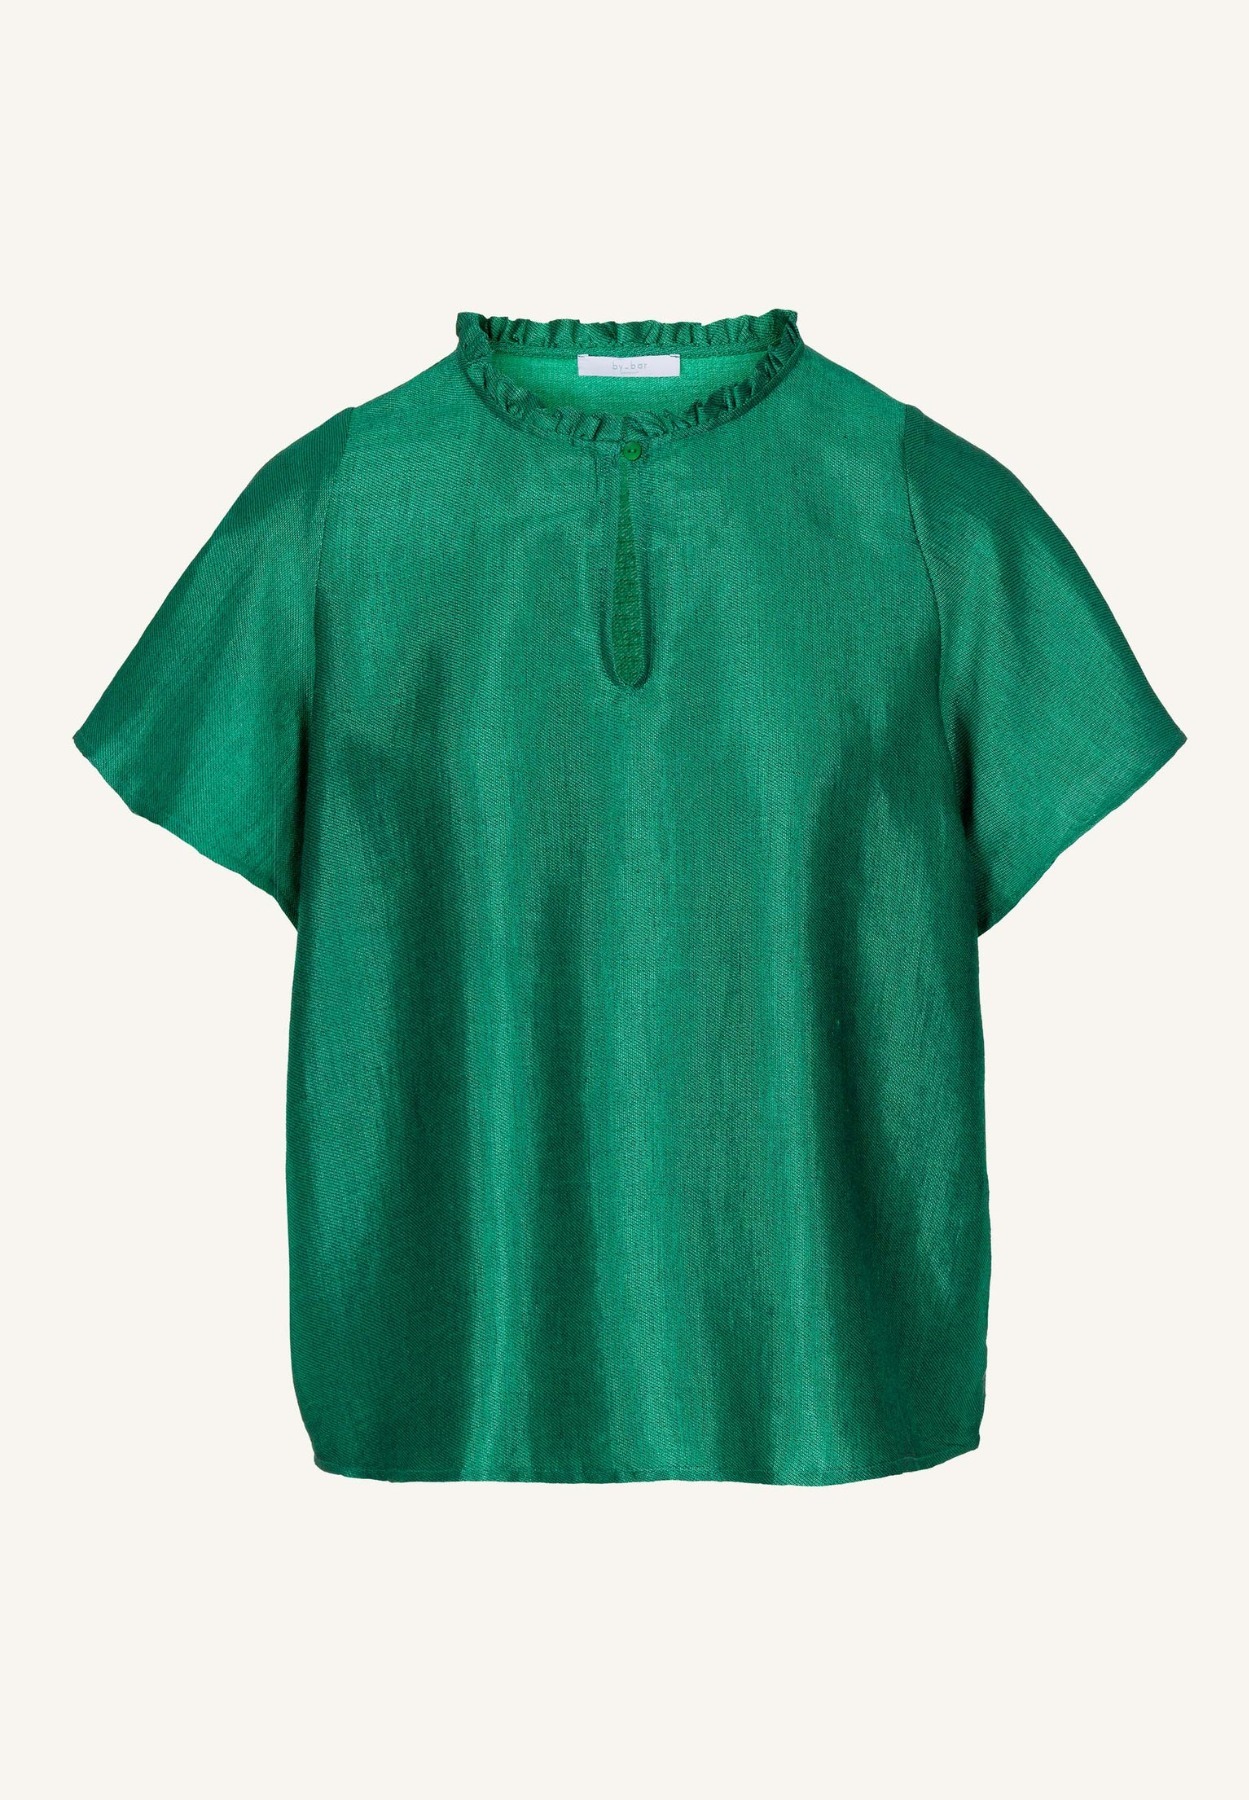 by-bar amsterdam - eva gloss blouse - green sparkle 5